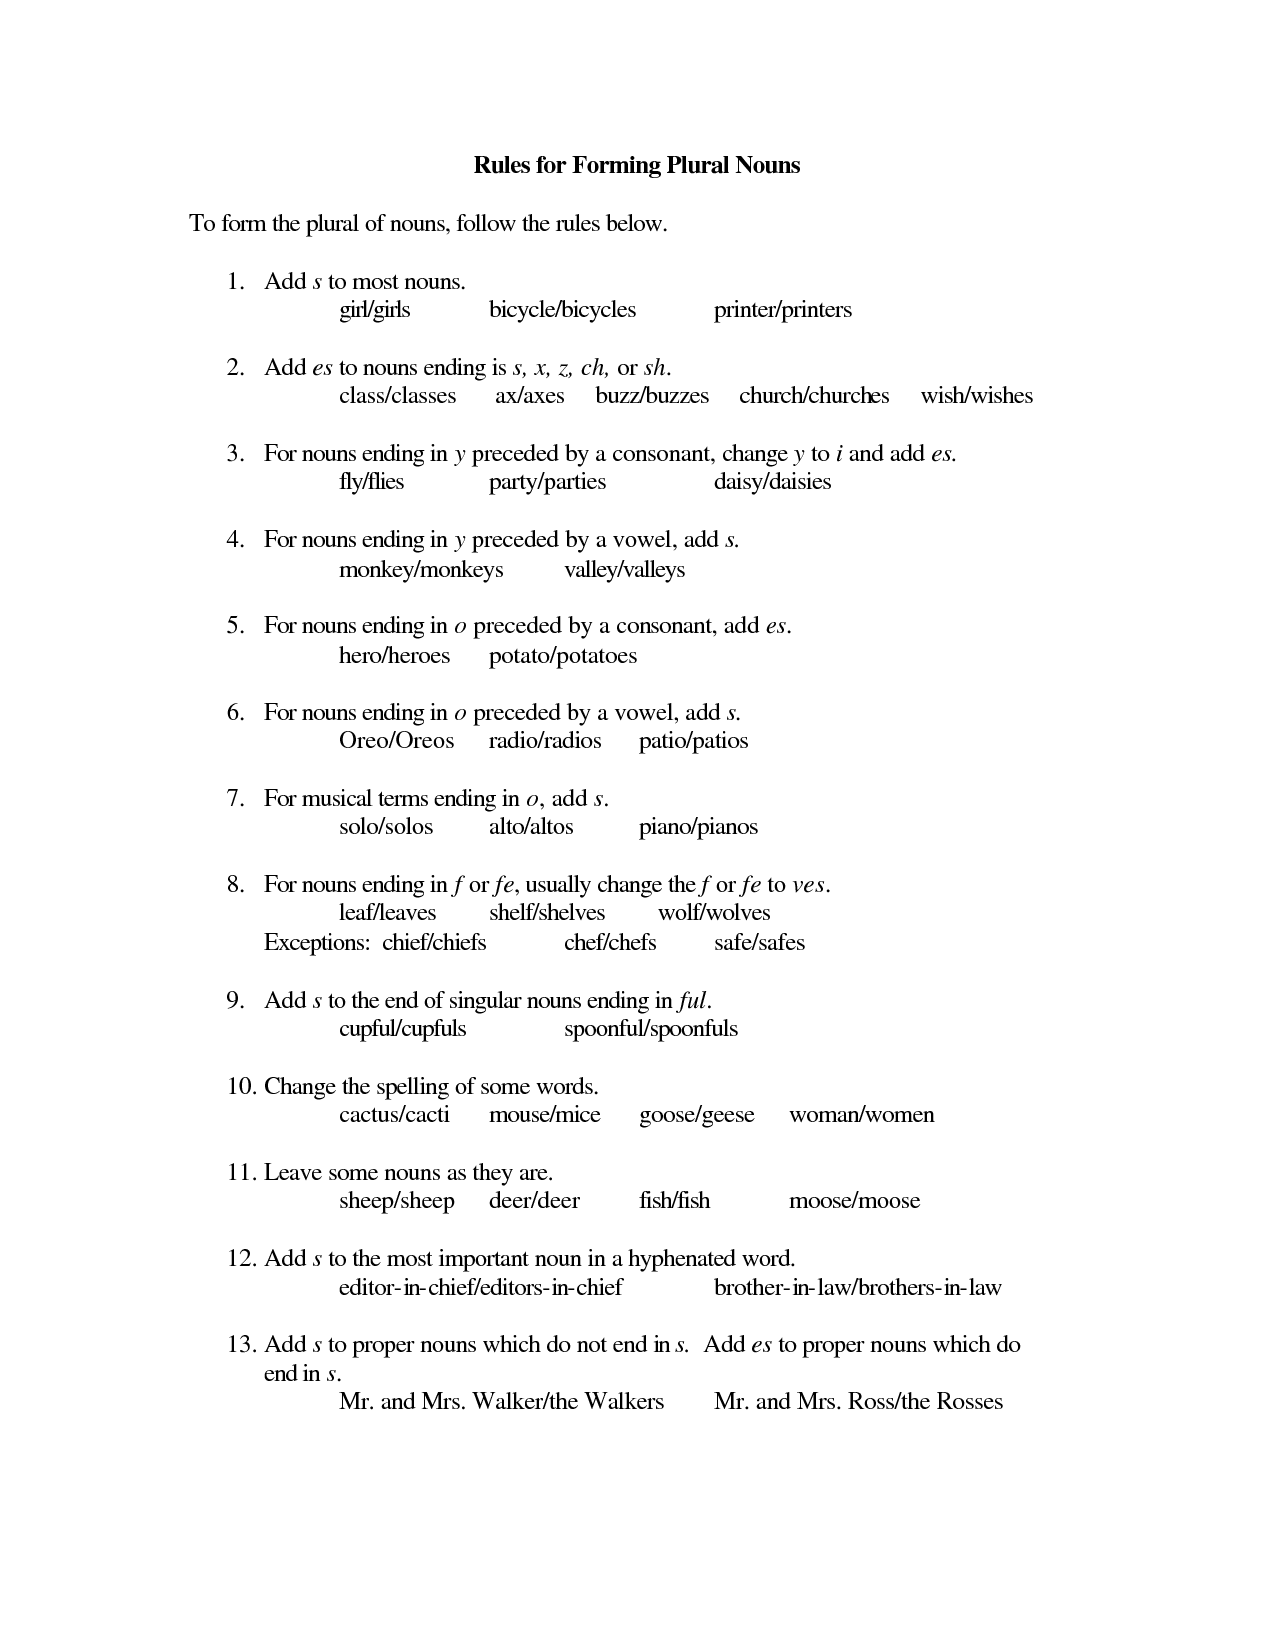 13-free-printable-worksheets-possessive-nouns-worksheeto